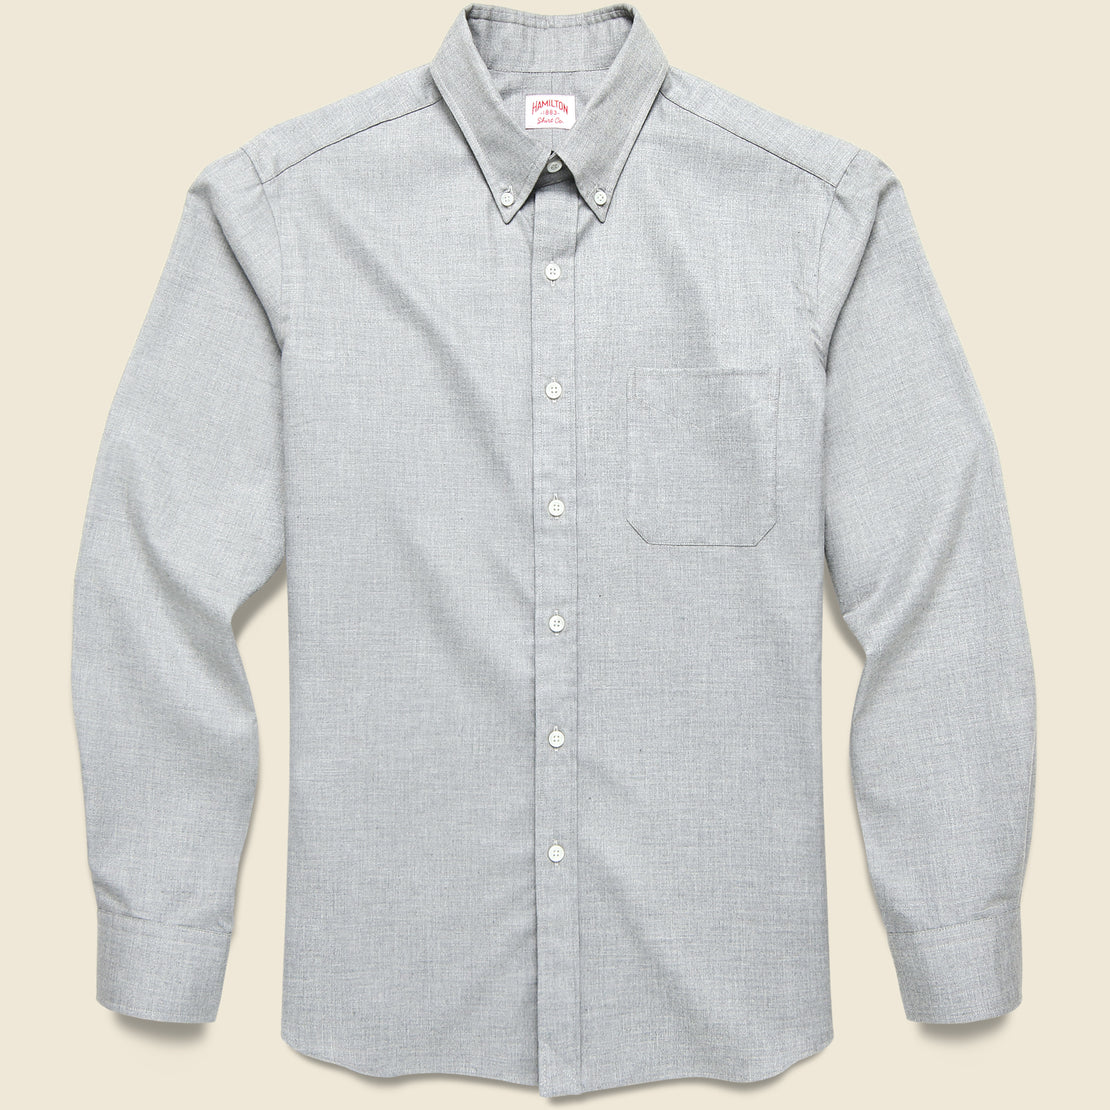 Hamilton Shirt Co. Solid Melange Sport Shirt - Grey